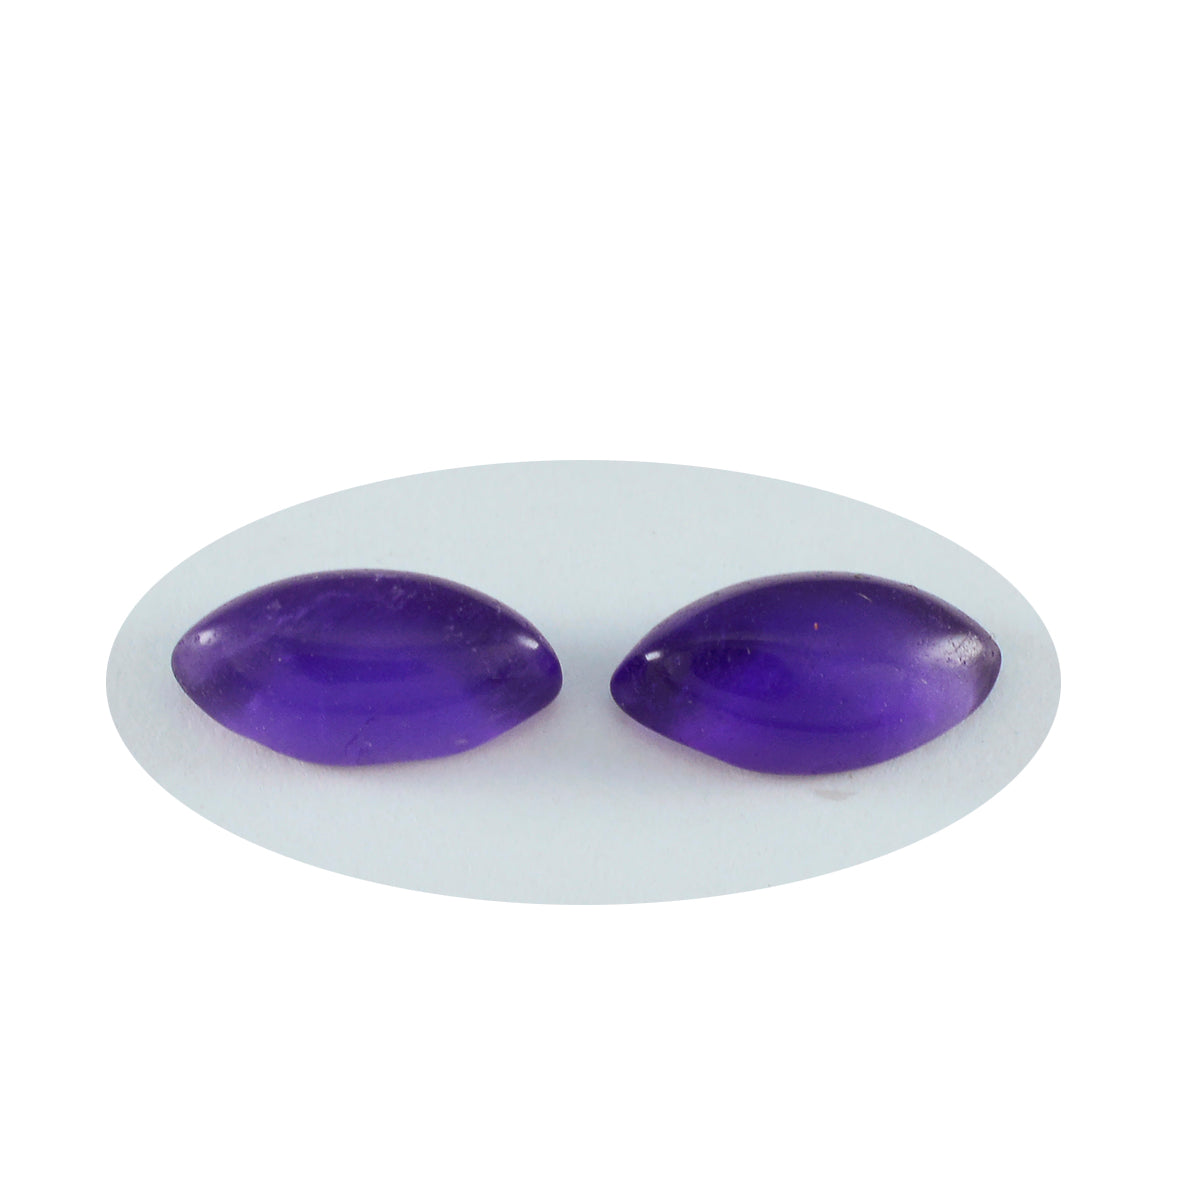 Riyogems 1PC Purple Amethyst Cabochon 5X10 mm Marquise Shape amazing Quality Stone